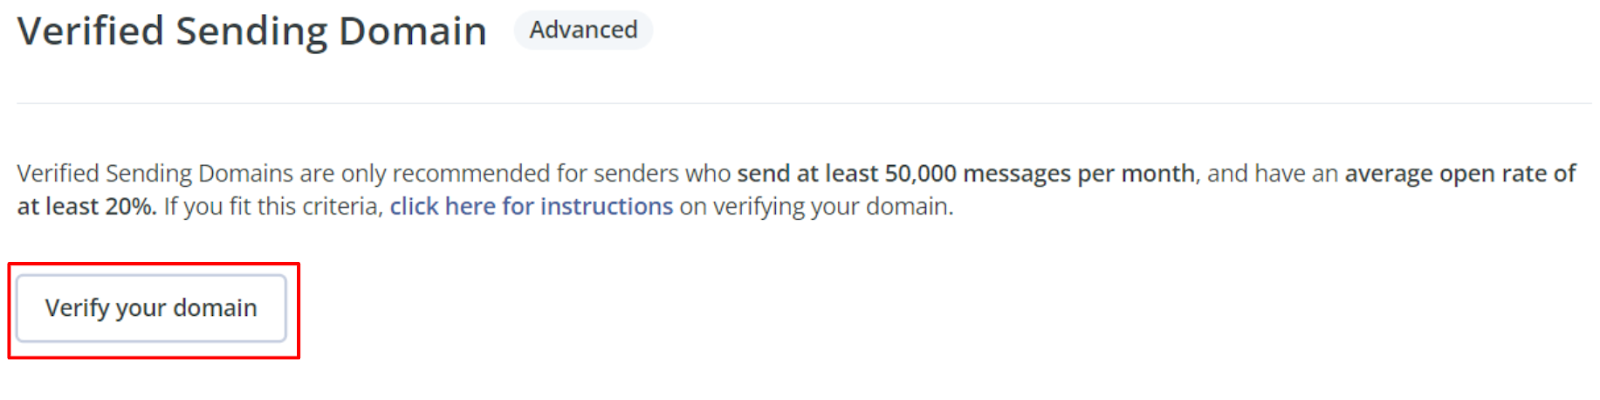 ConvertKit verified sending domain set up